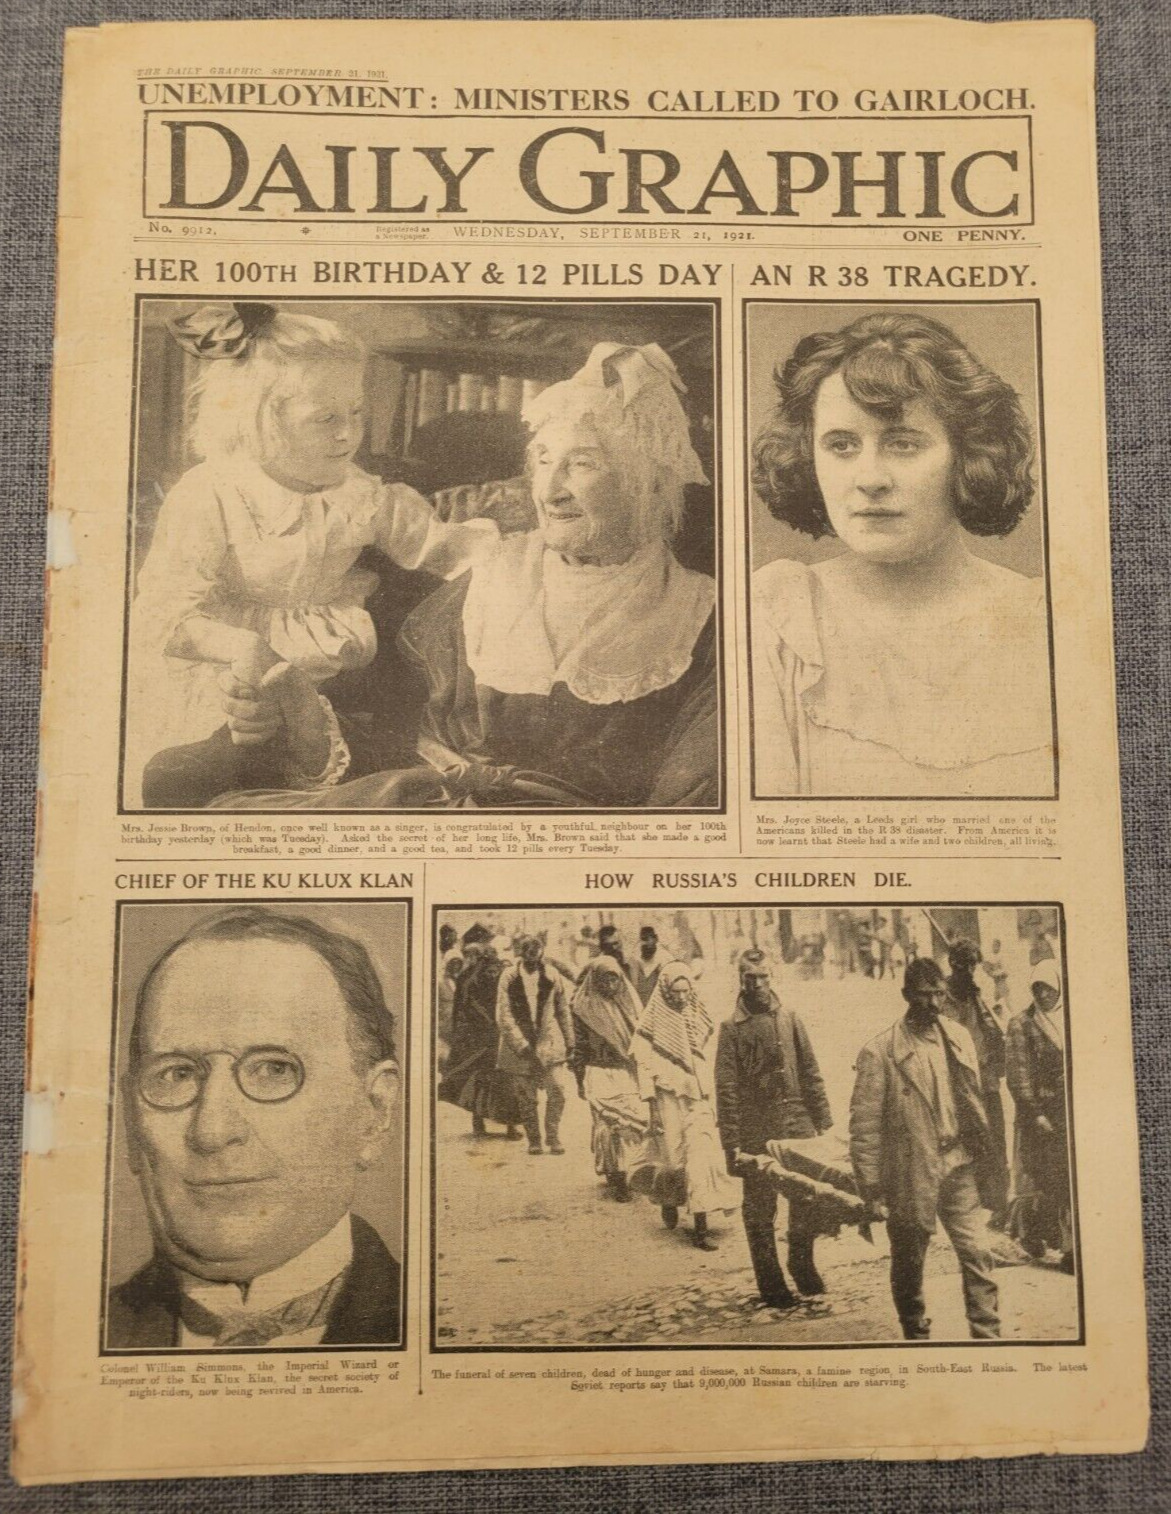 DAILY GRAPHIC CHIEF OF KKK WILLIAM SIMMONS 21ST SEPT 1921 NEWSPAPER